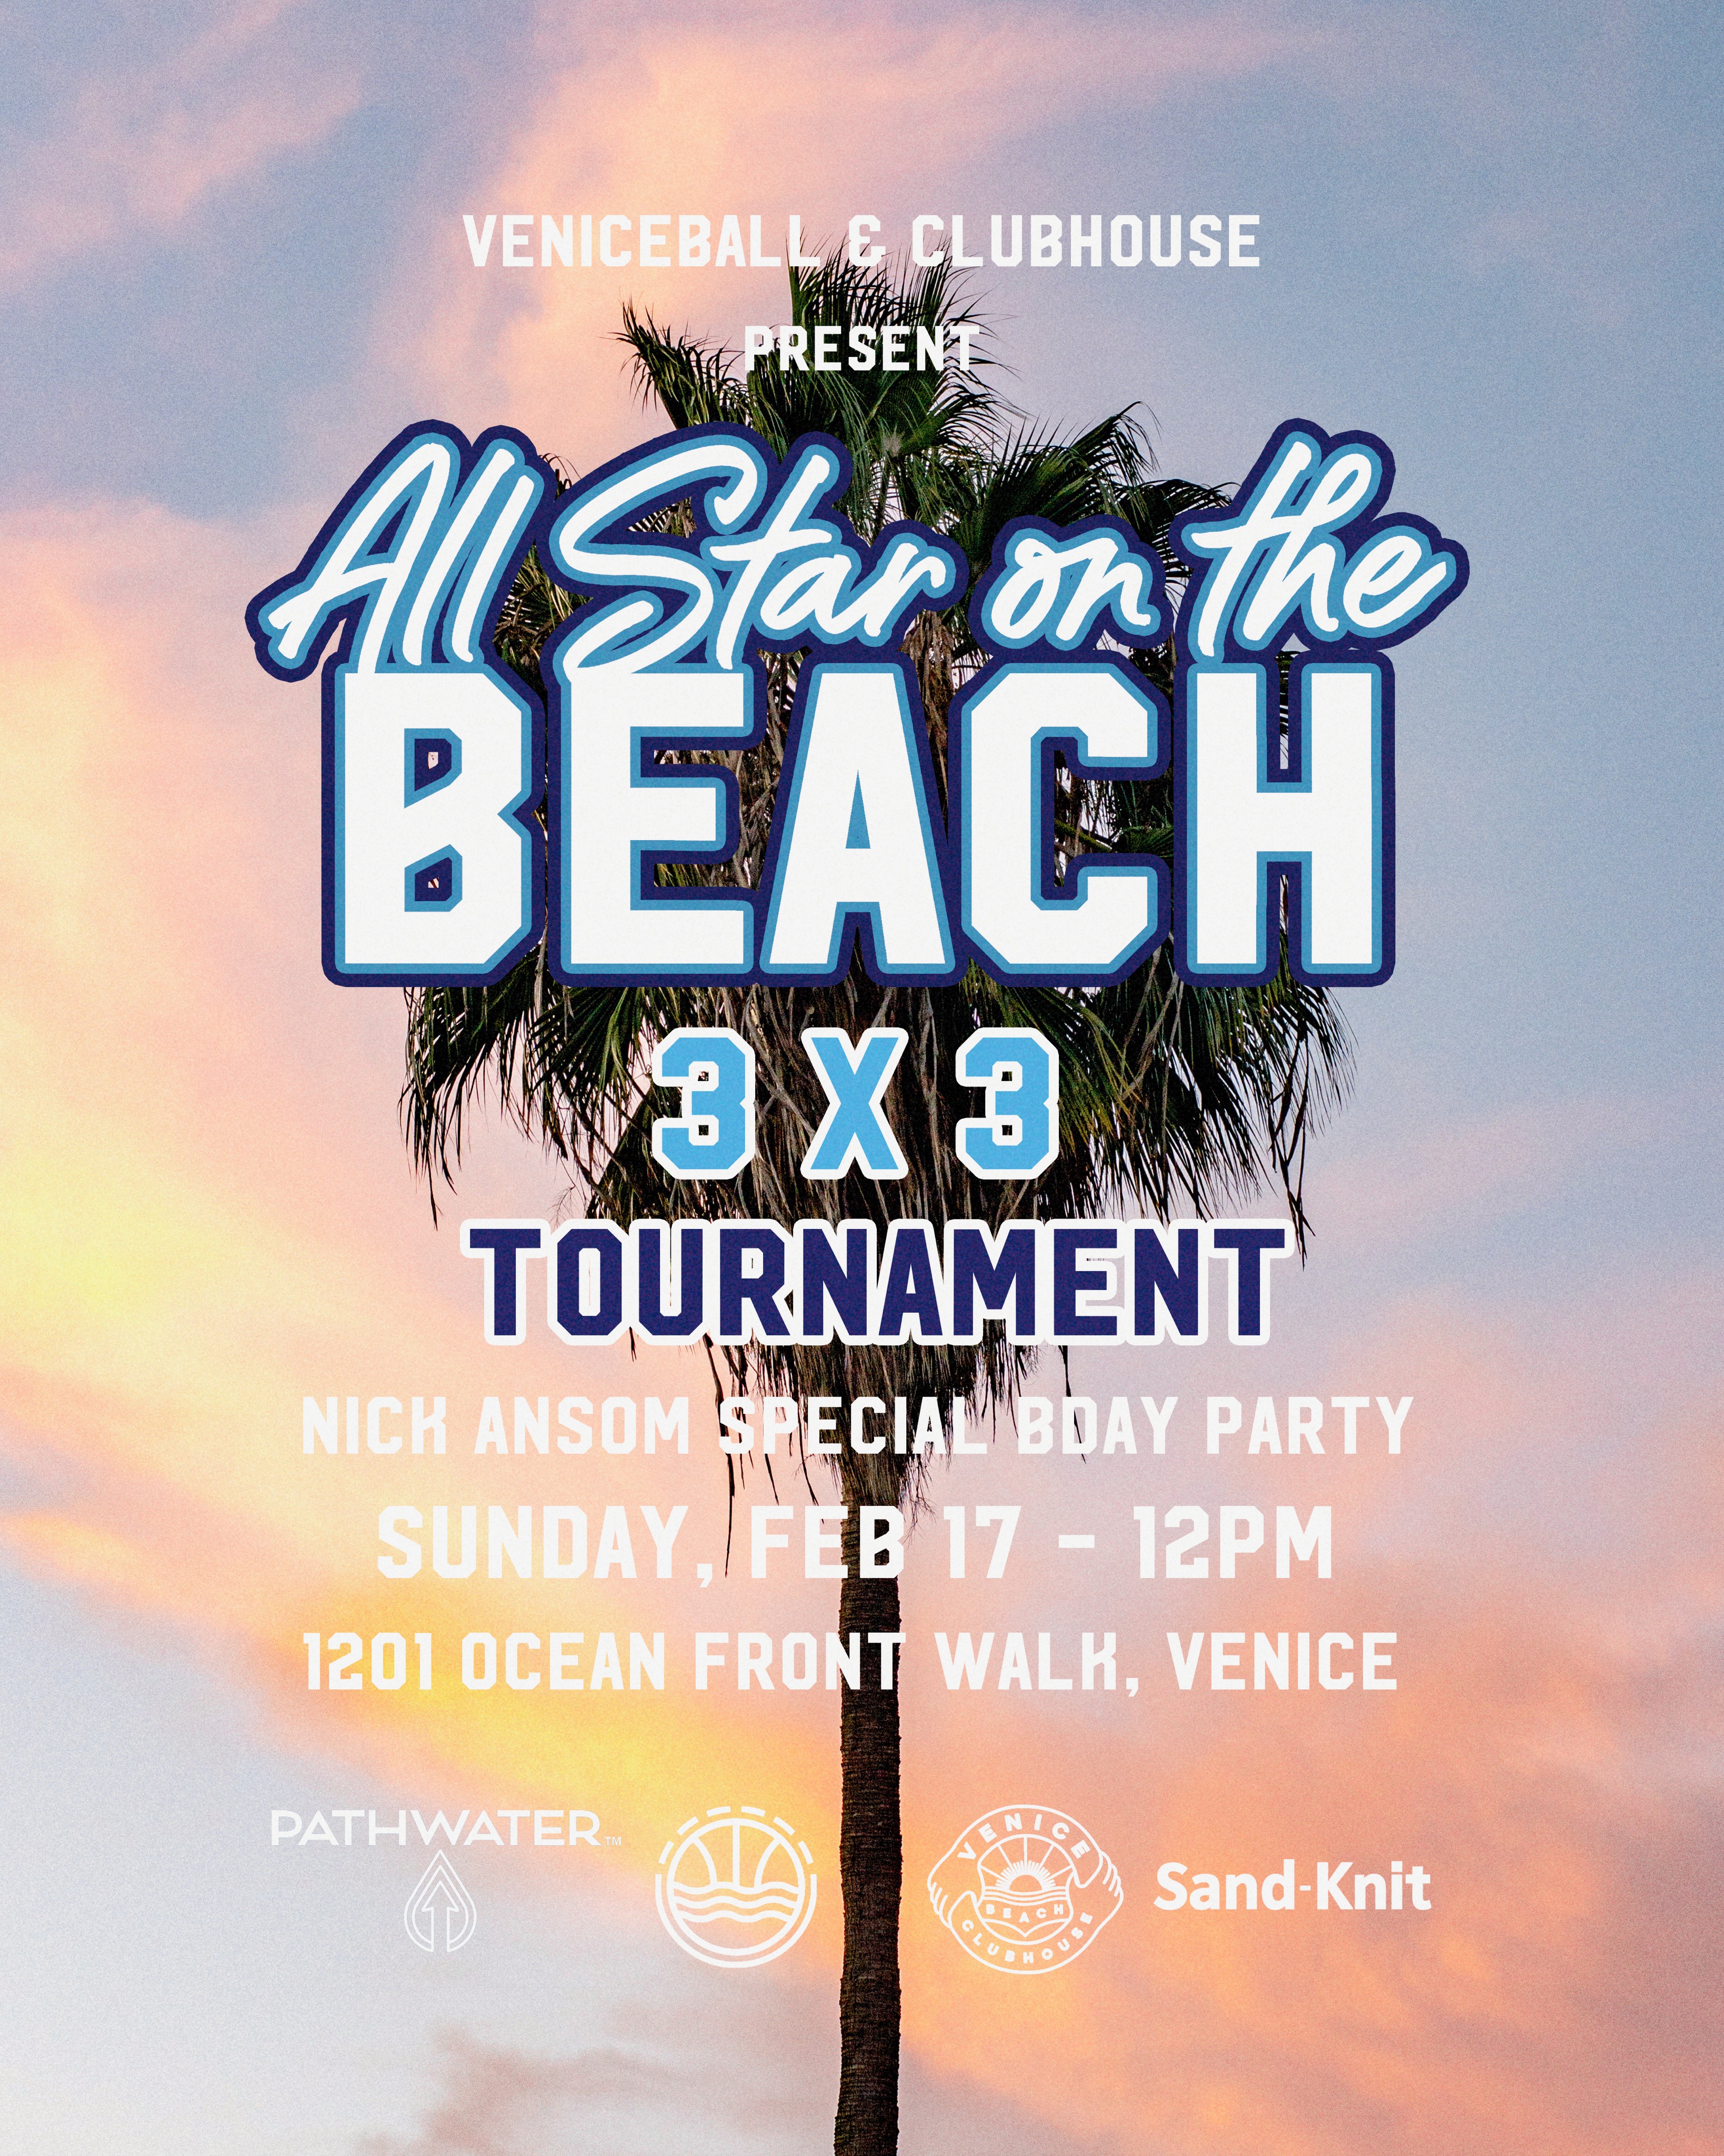 All Star on the Beach this Sunday